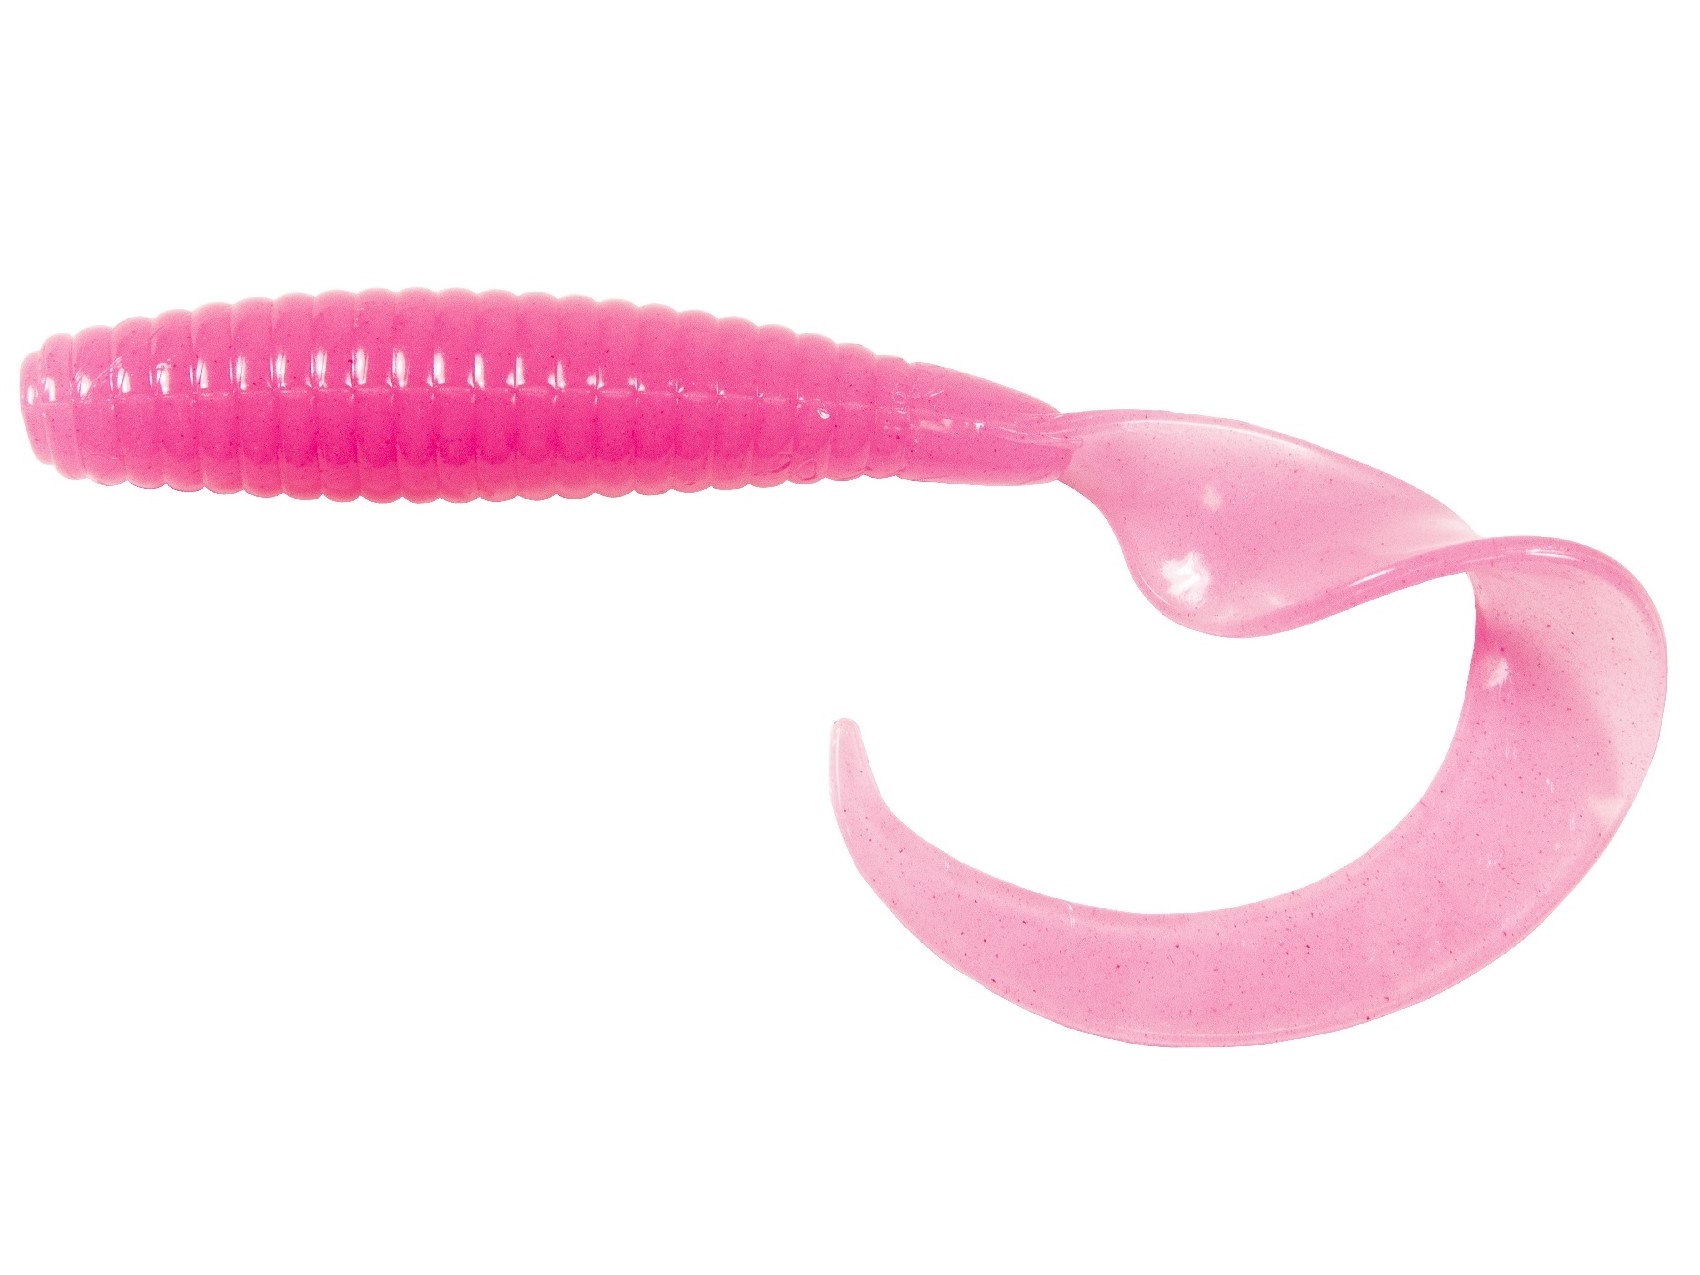 Curly Tail Grub Z-Man Doormatadorz 6" col. 270 Pink Glow